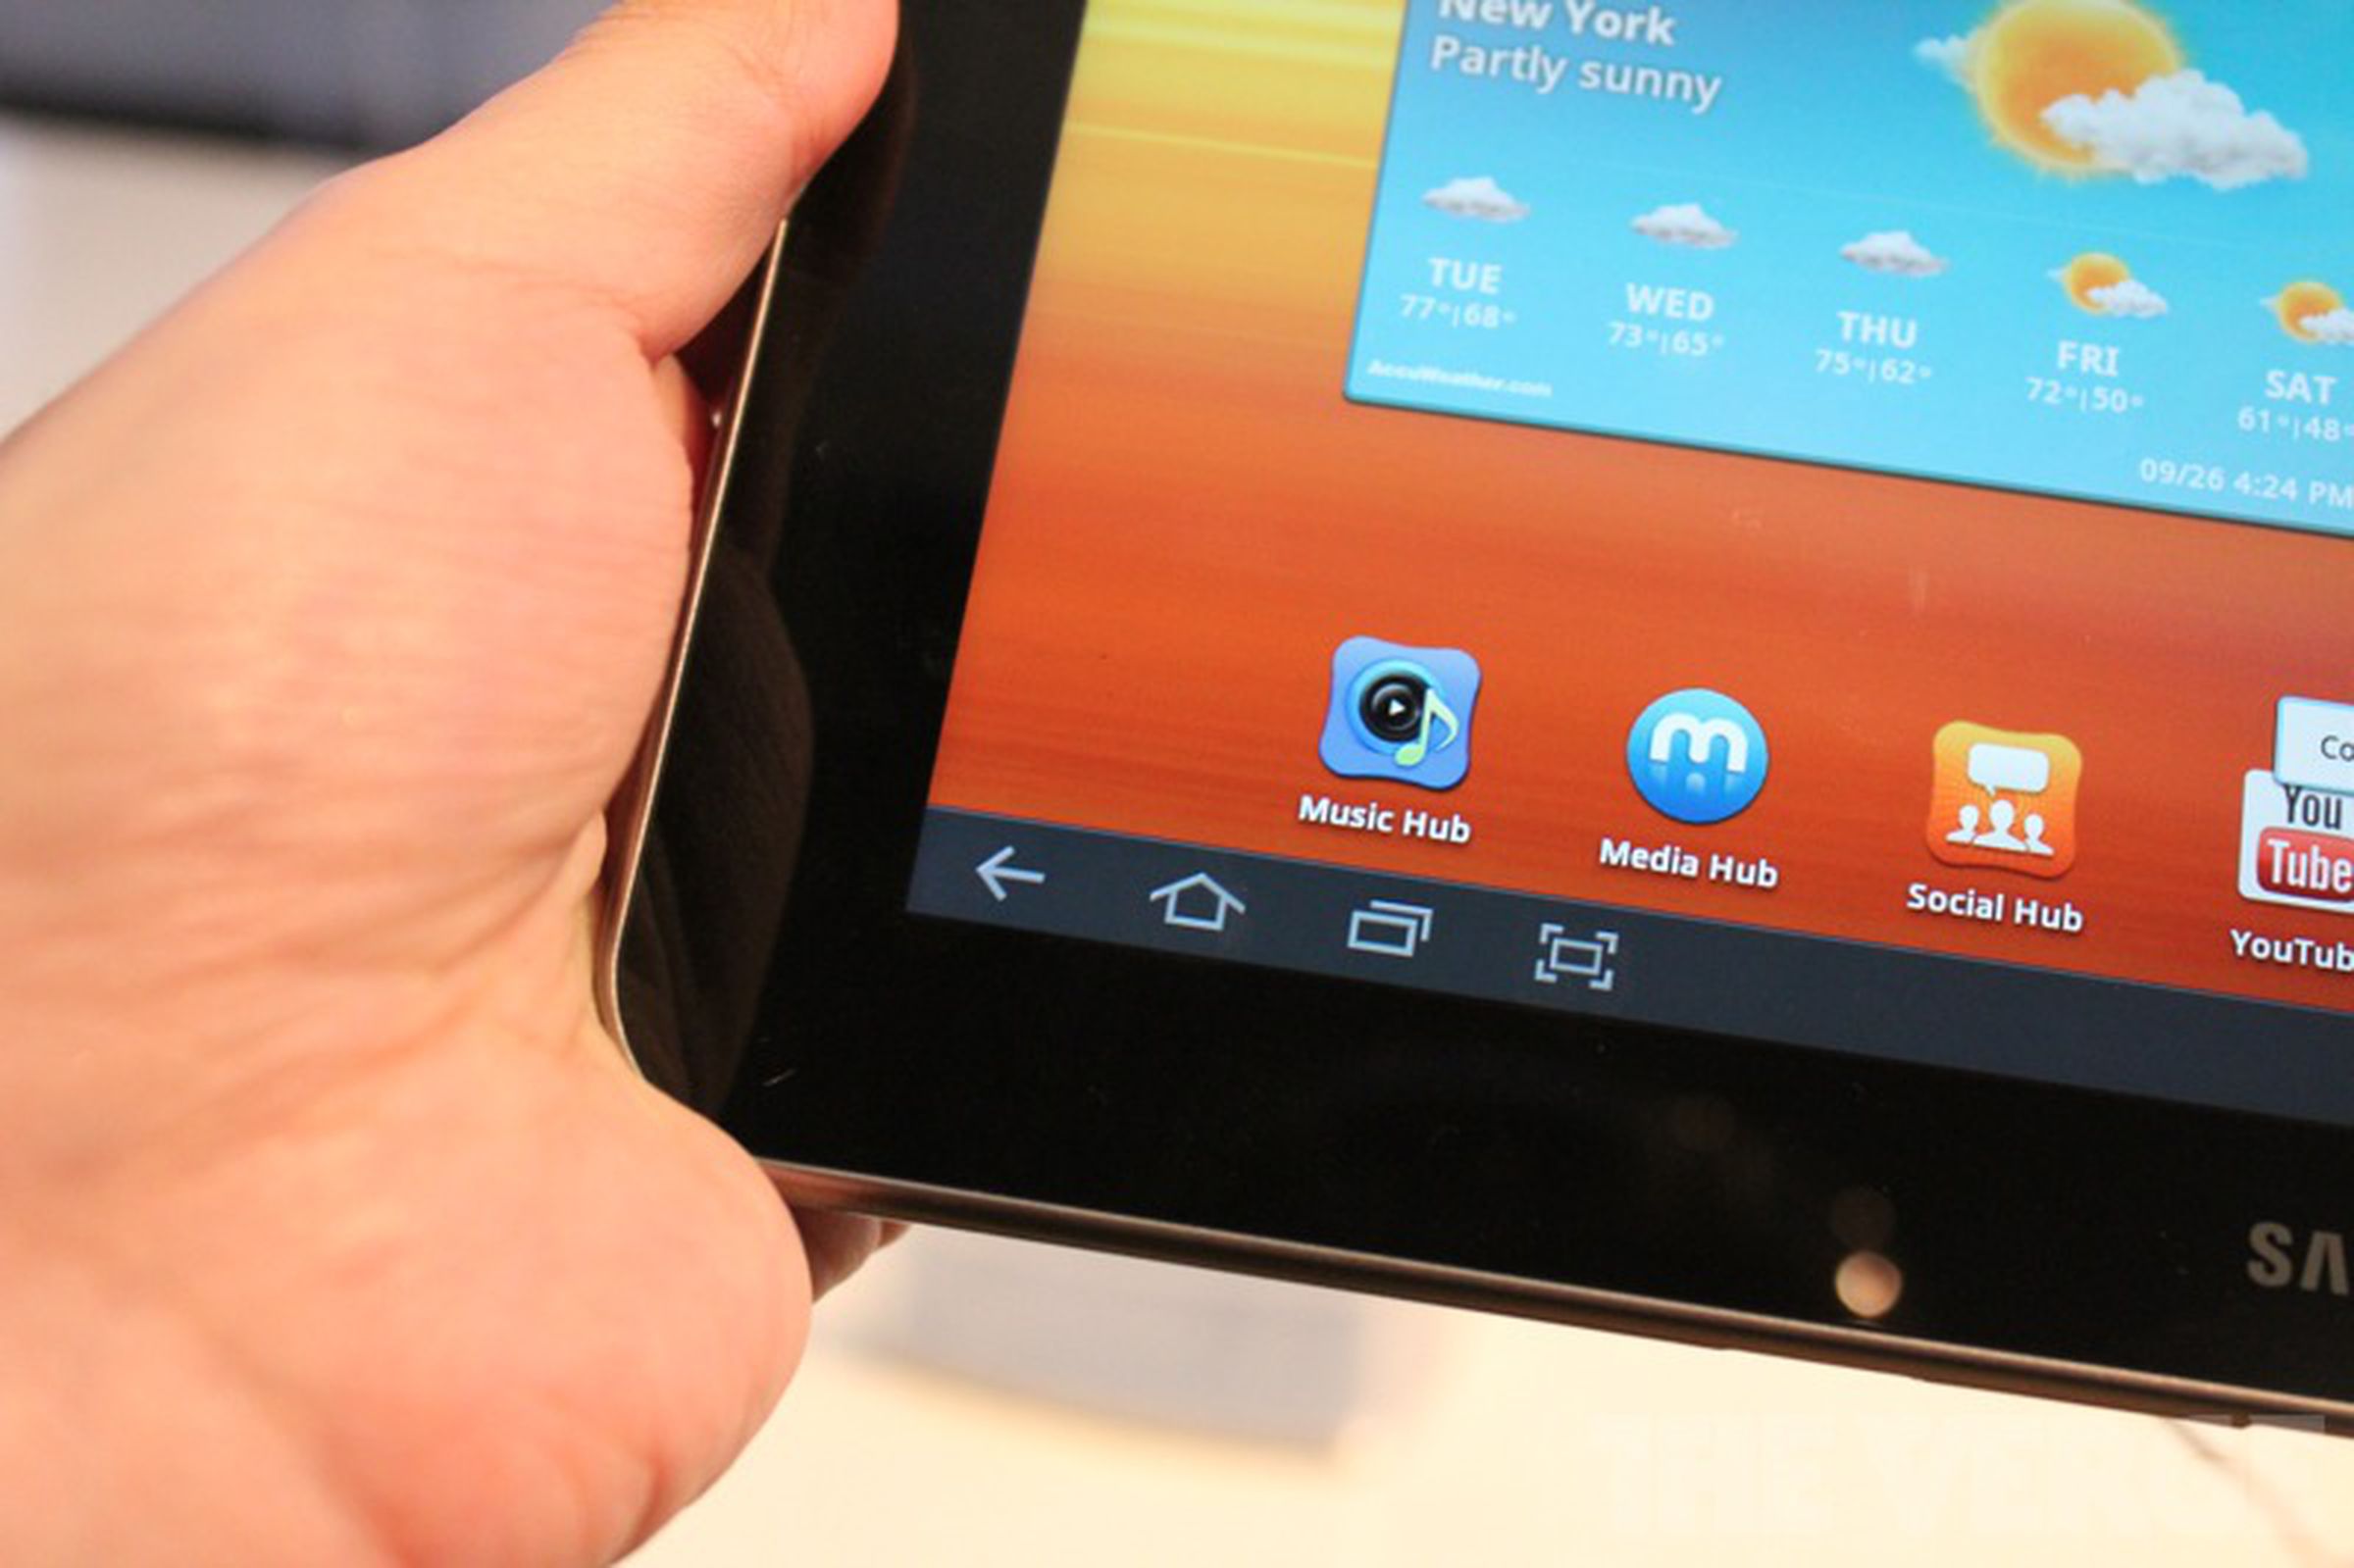 Samsung Galaxy Tab 8.9 hands-on